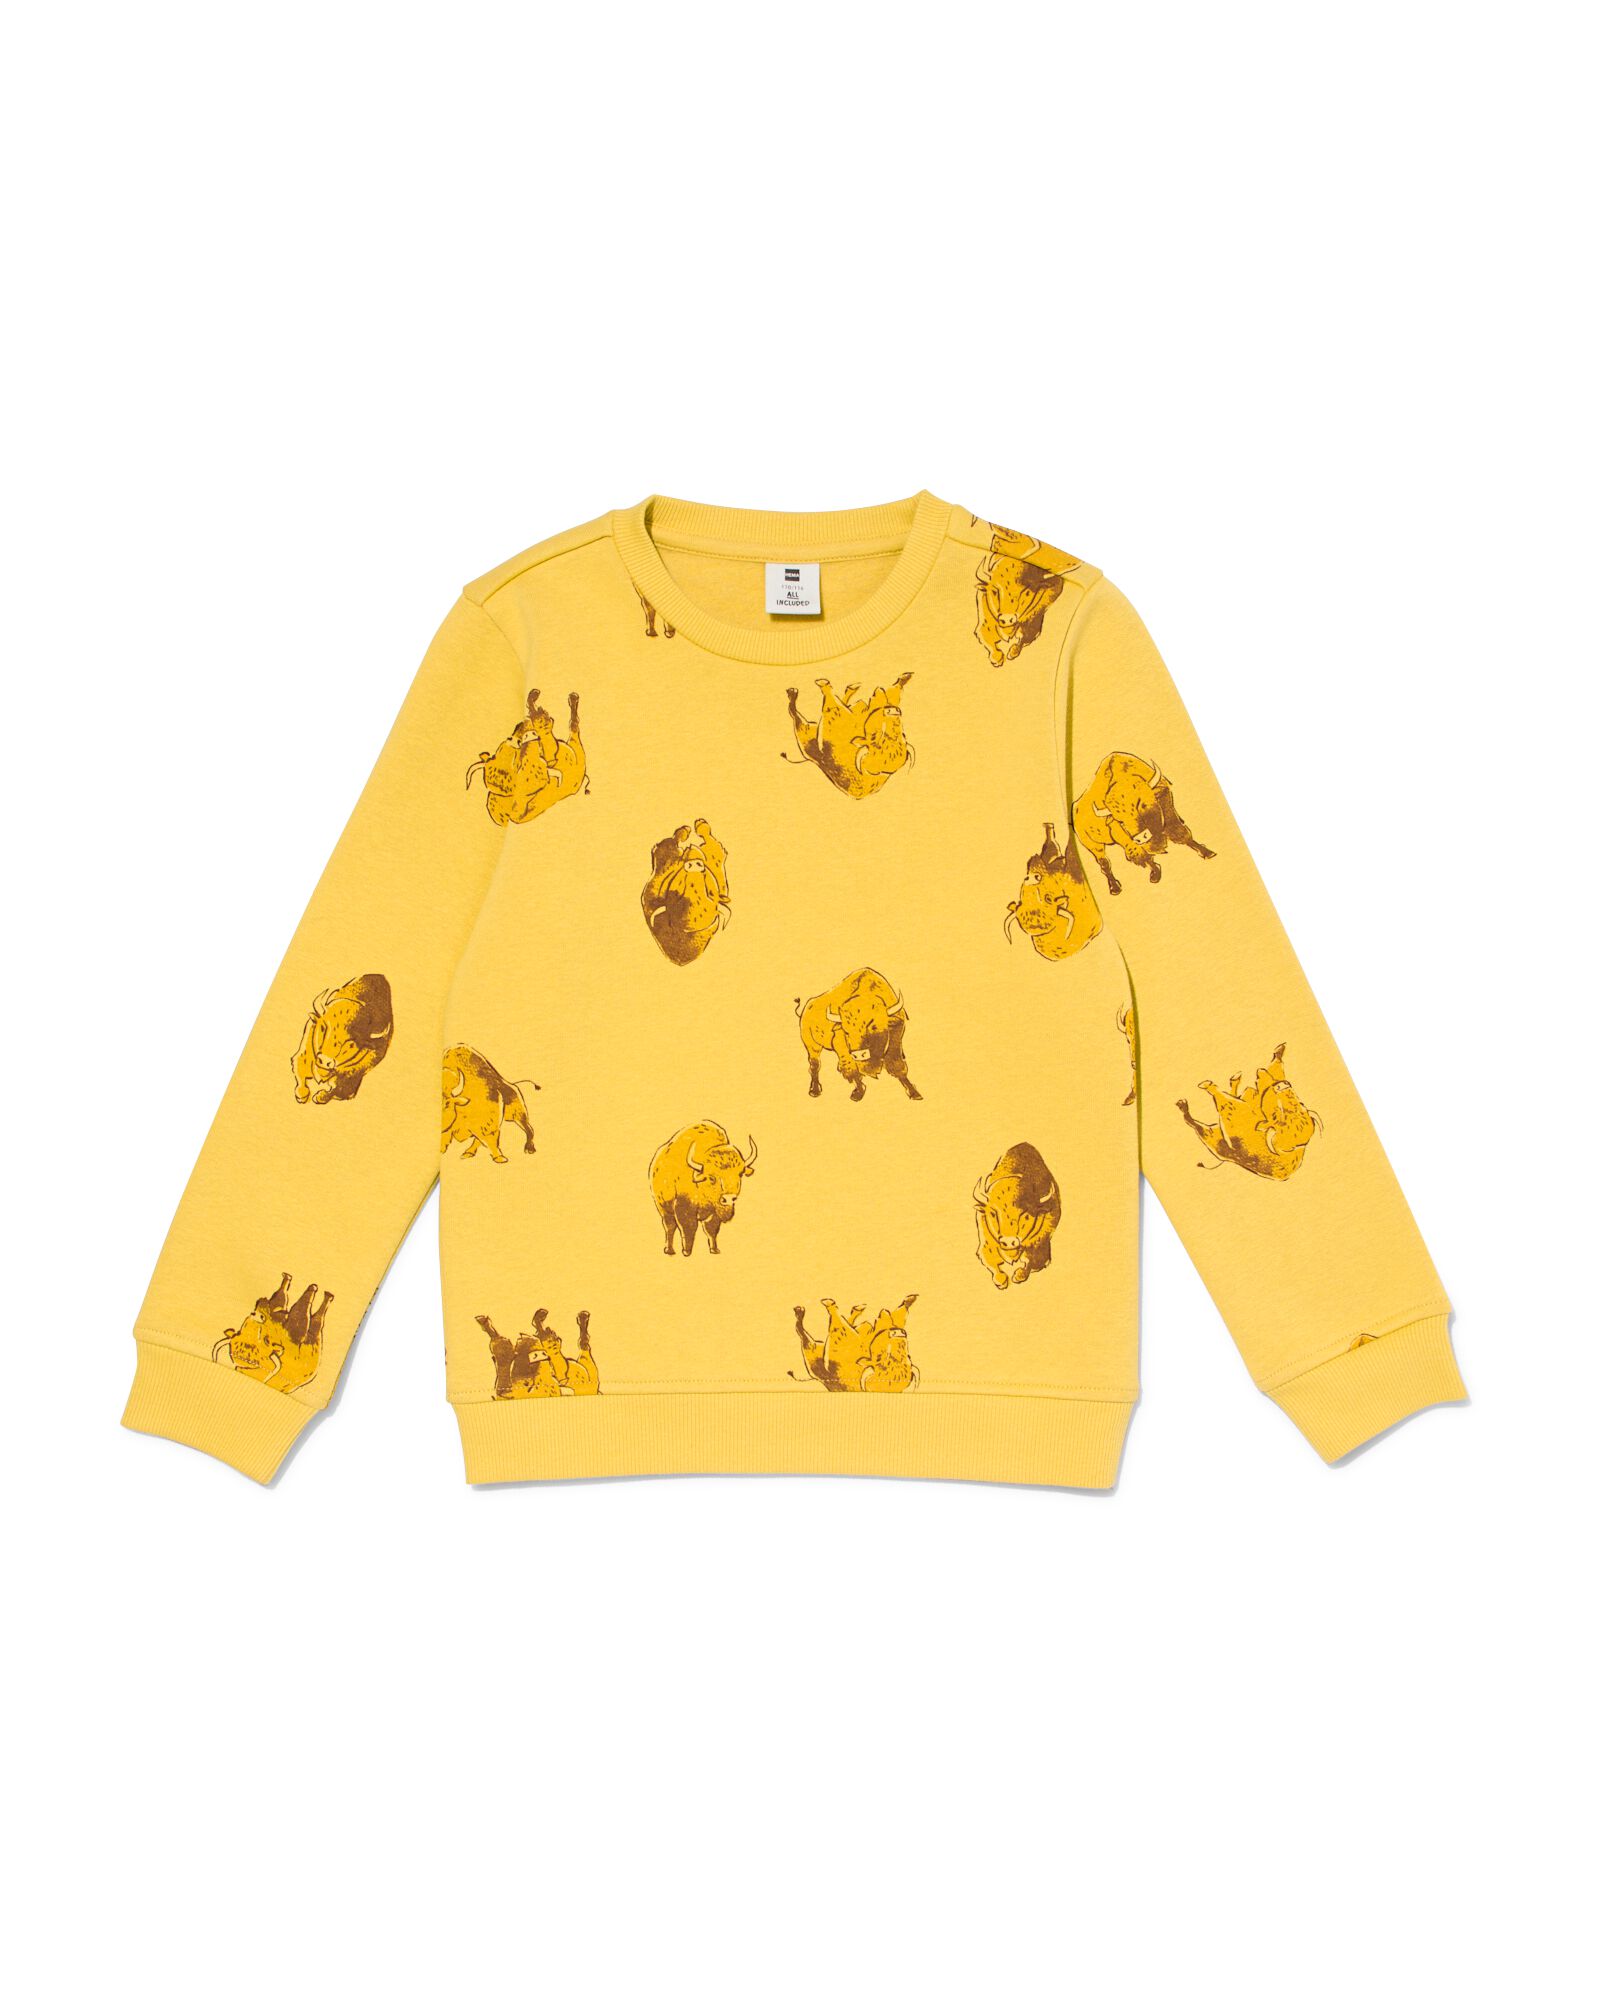 kinder sweater bizon geel 98/104 - 30770842 - HEMA